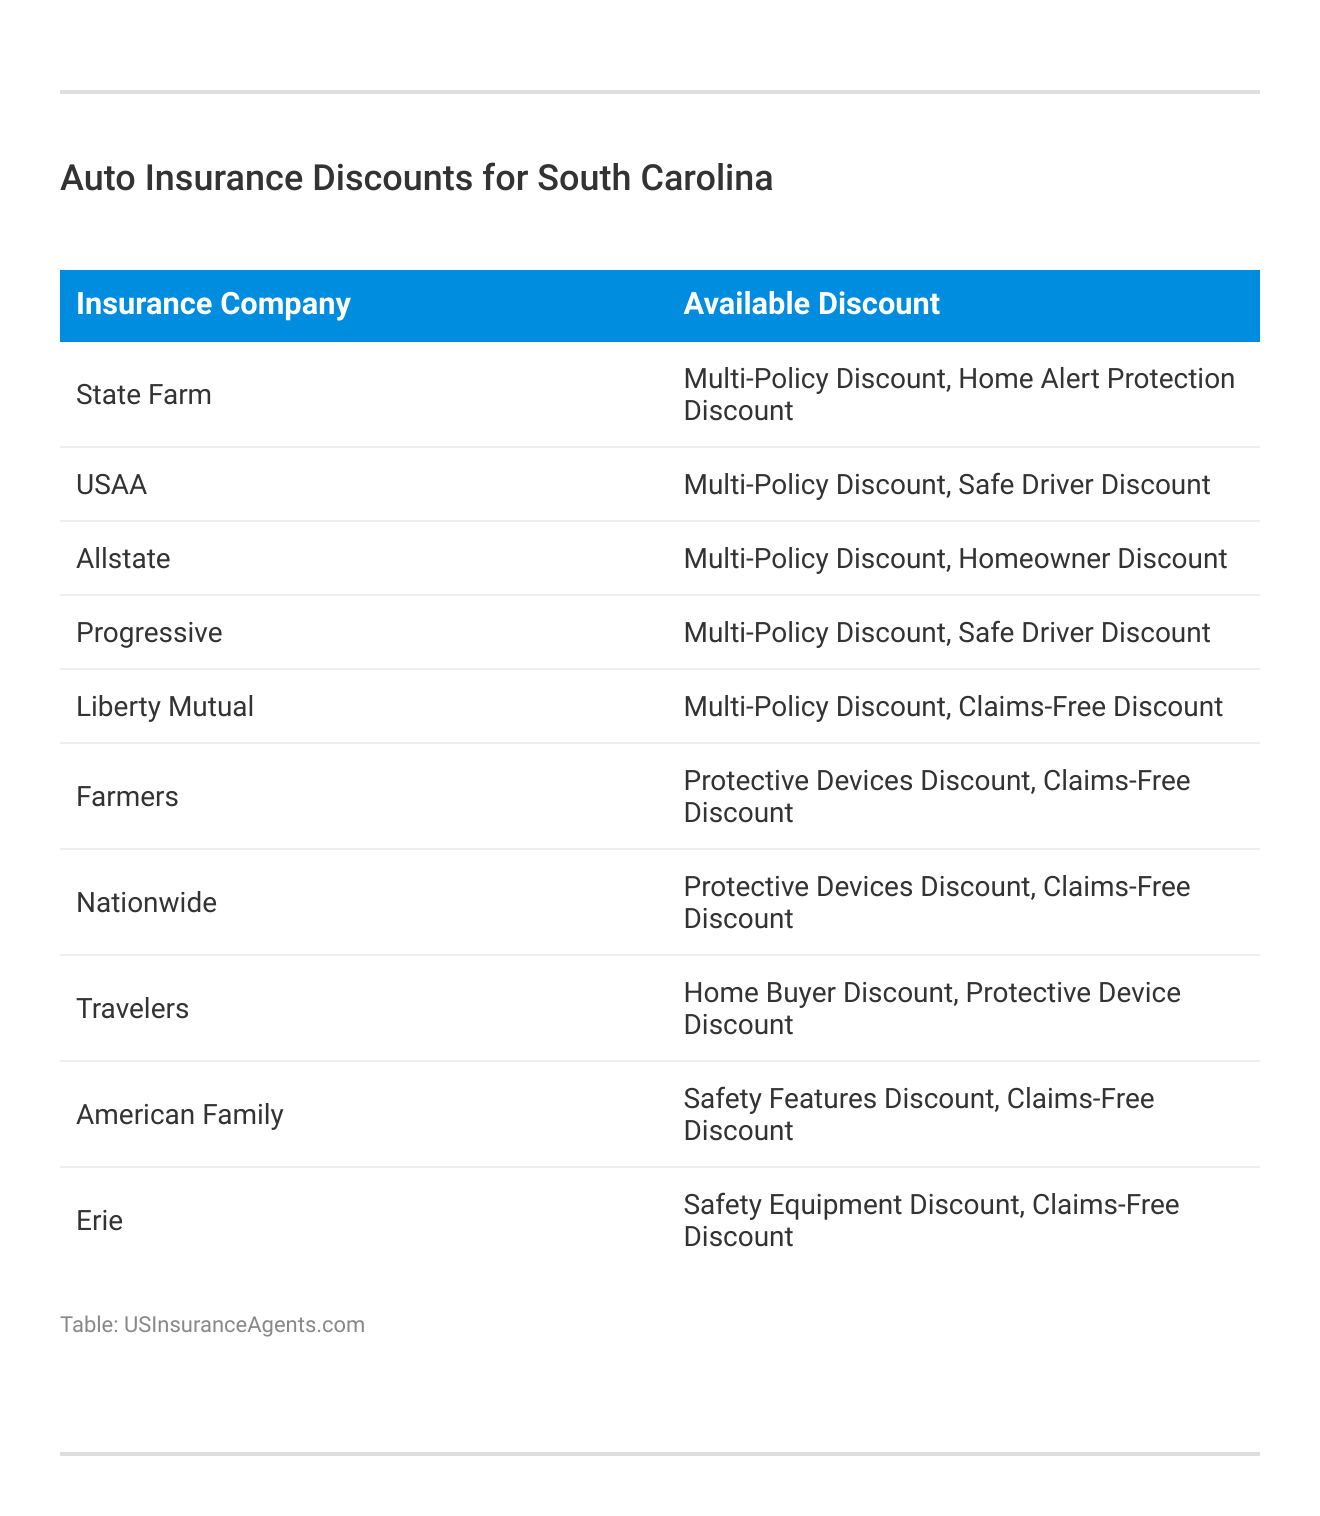 <h3>Auto Insurance Discounts for South Carolina</h3>